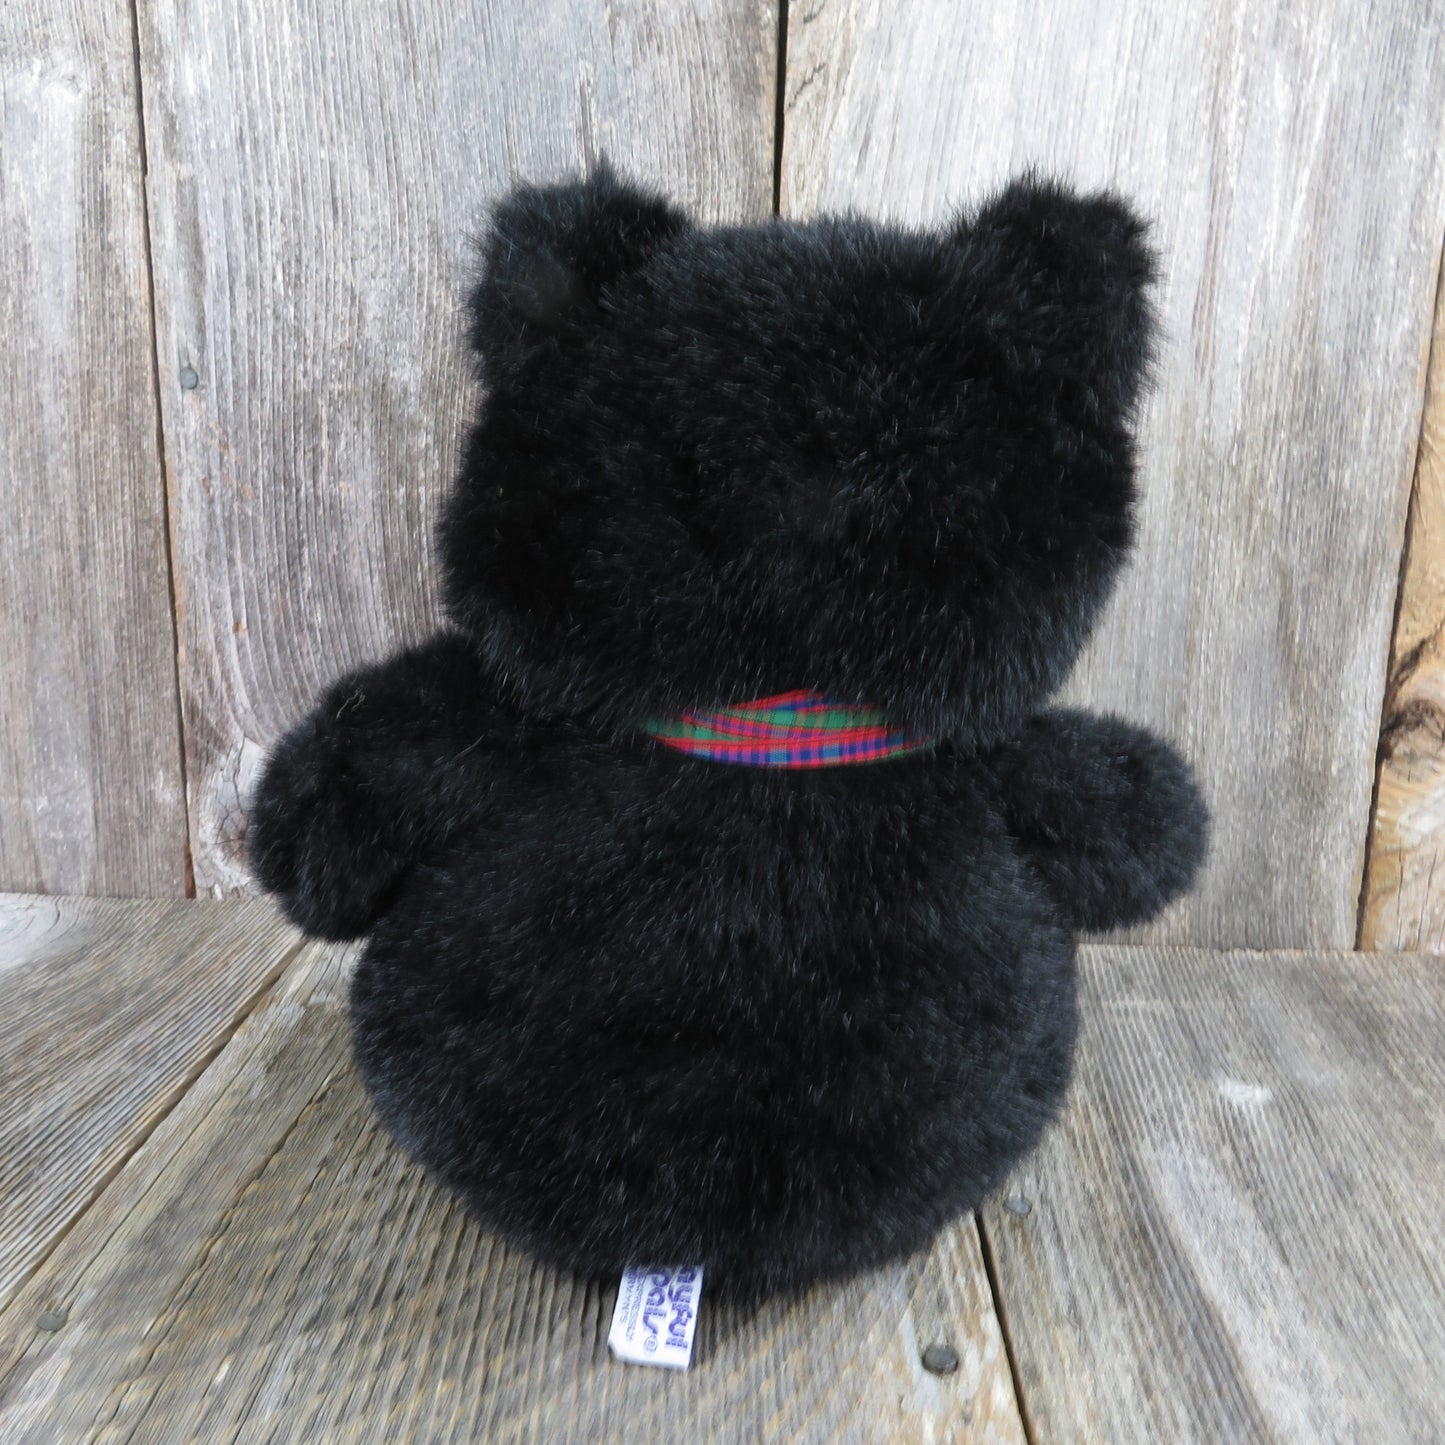 Vintage Black Teddy Bear Plush Playful Pals Brown Nose Feet Stuffed Animal Plaid Bow Mervyns 11 inches - At Grandma's Table